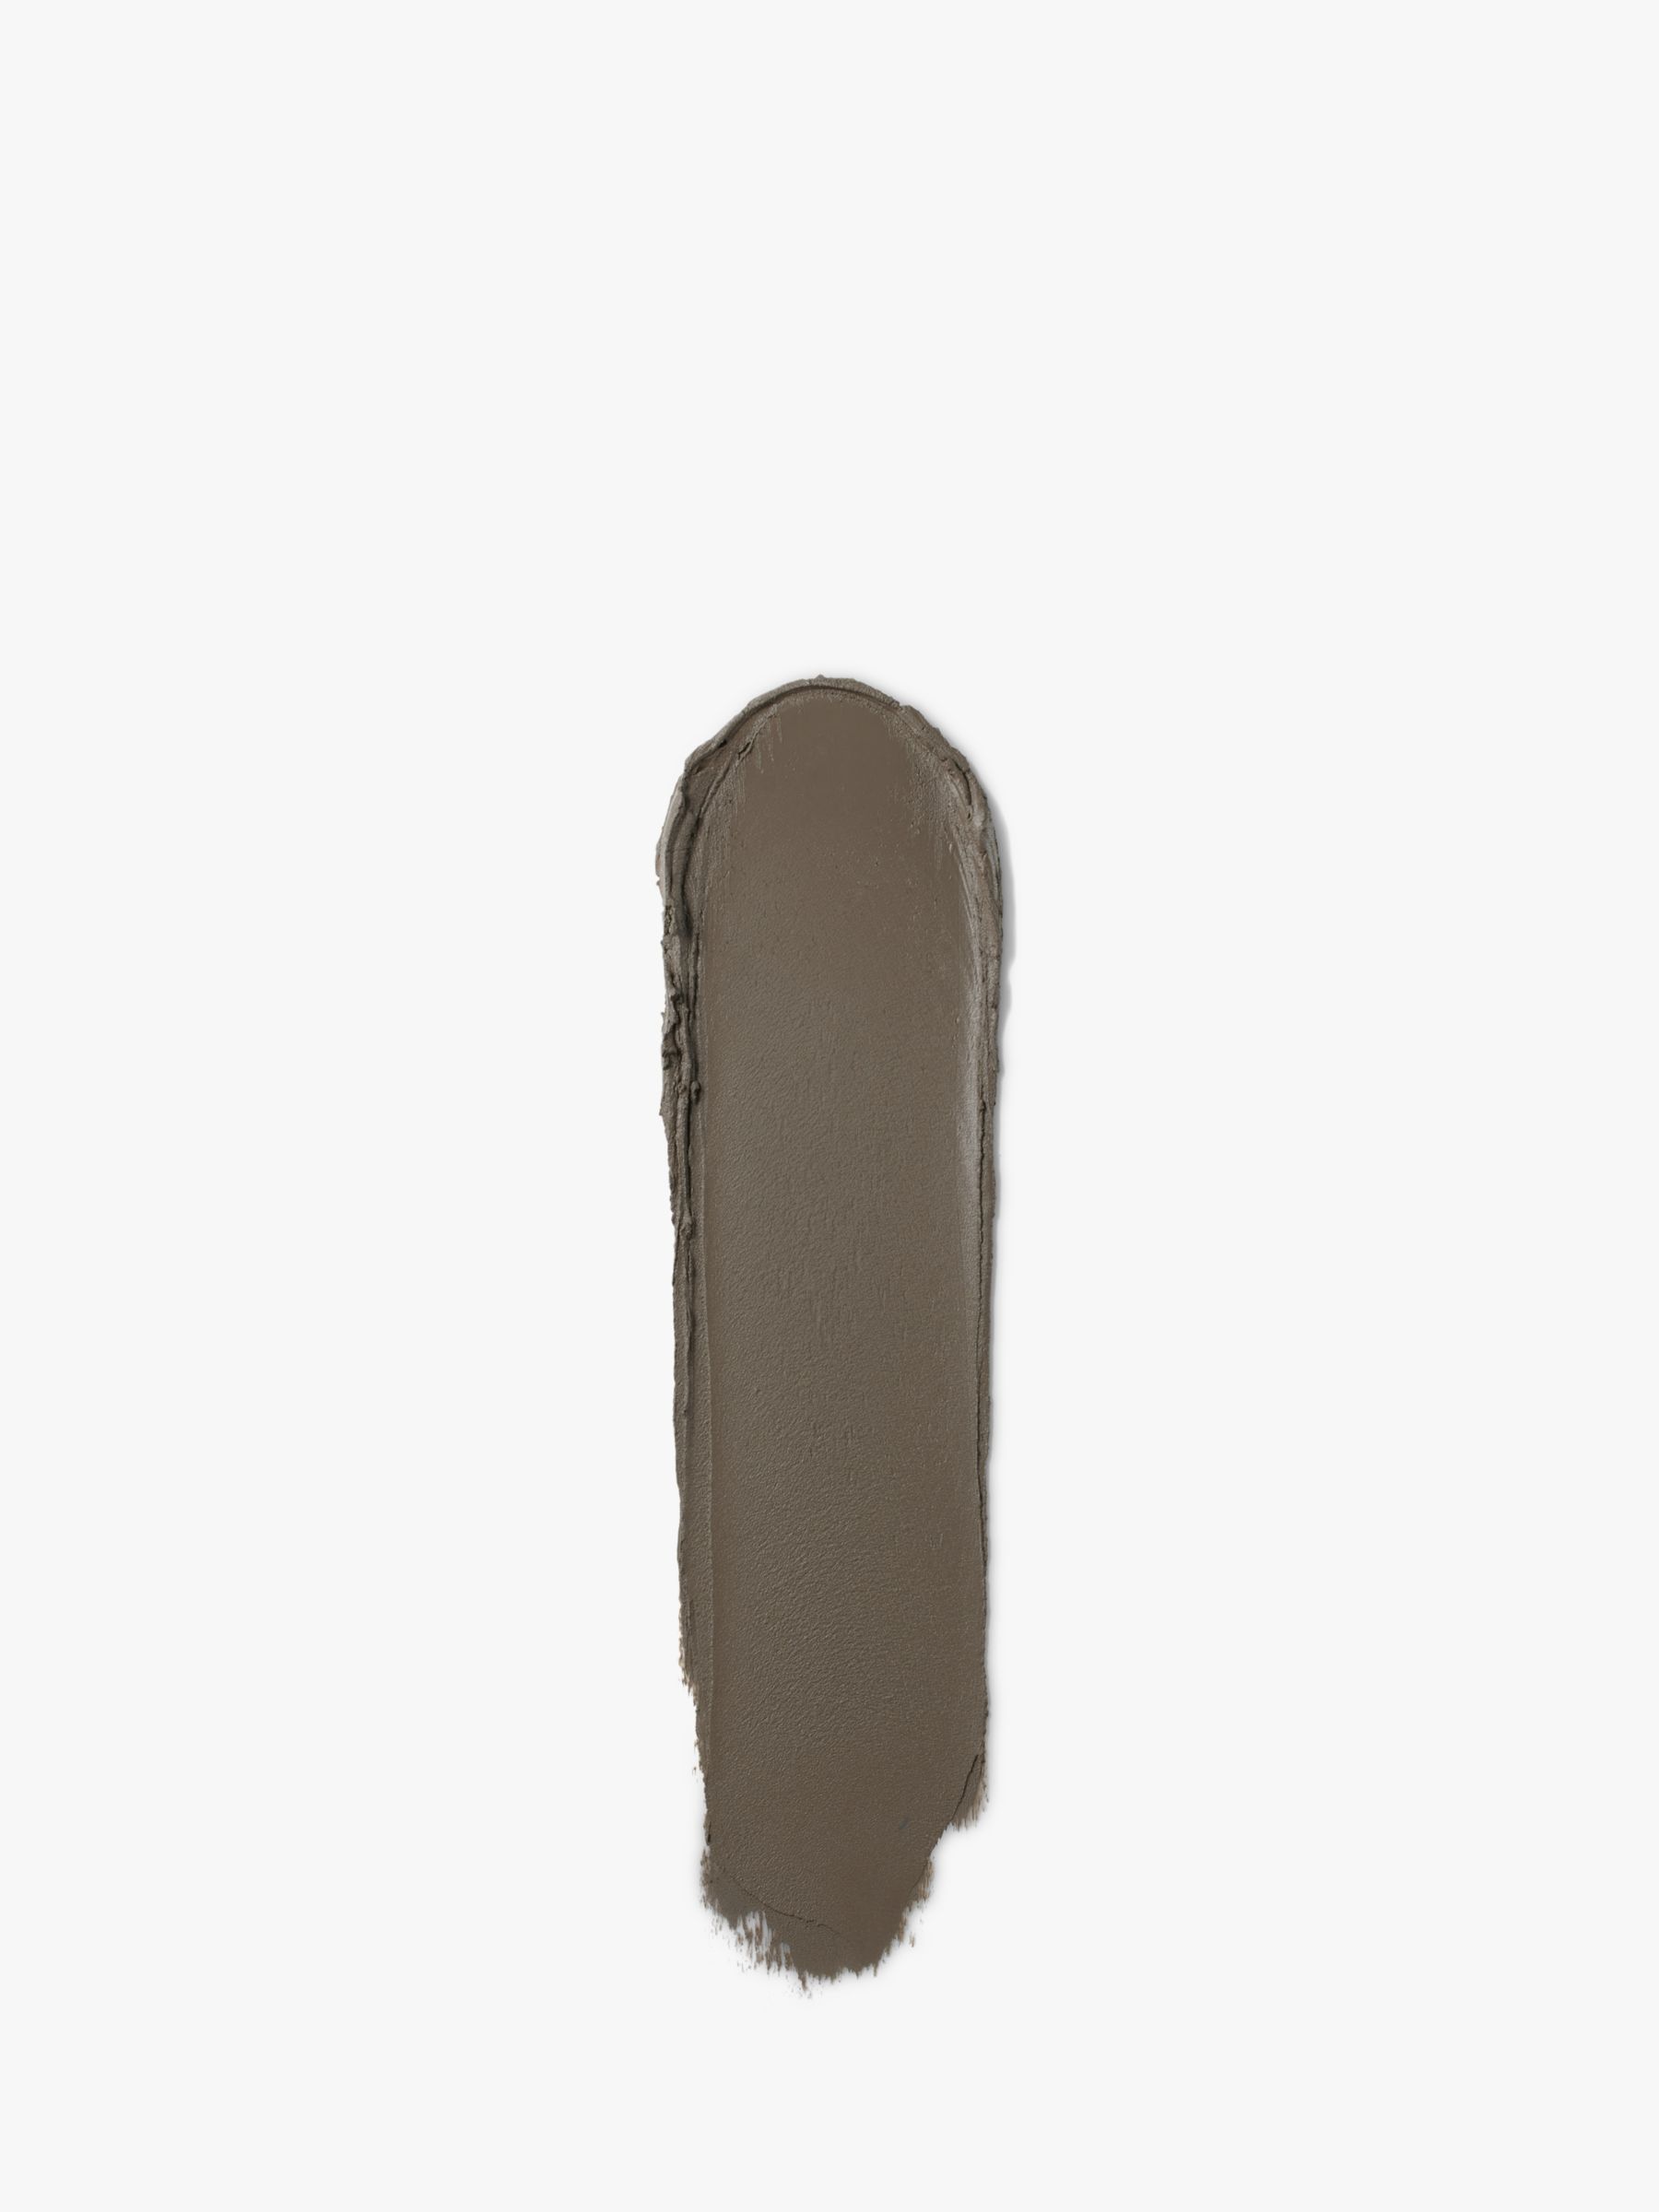 Bobbi Brown Long-Wear Cream Liner Stick, Fog 2